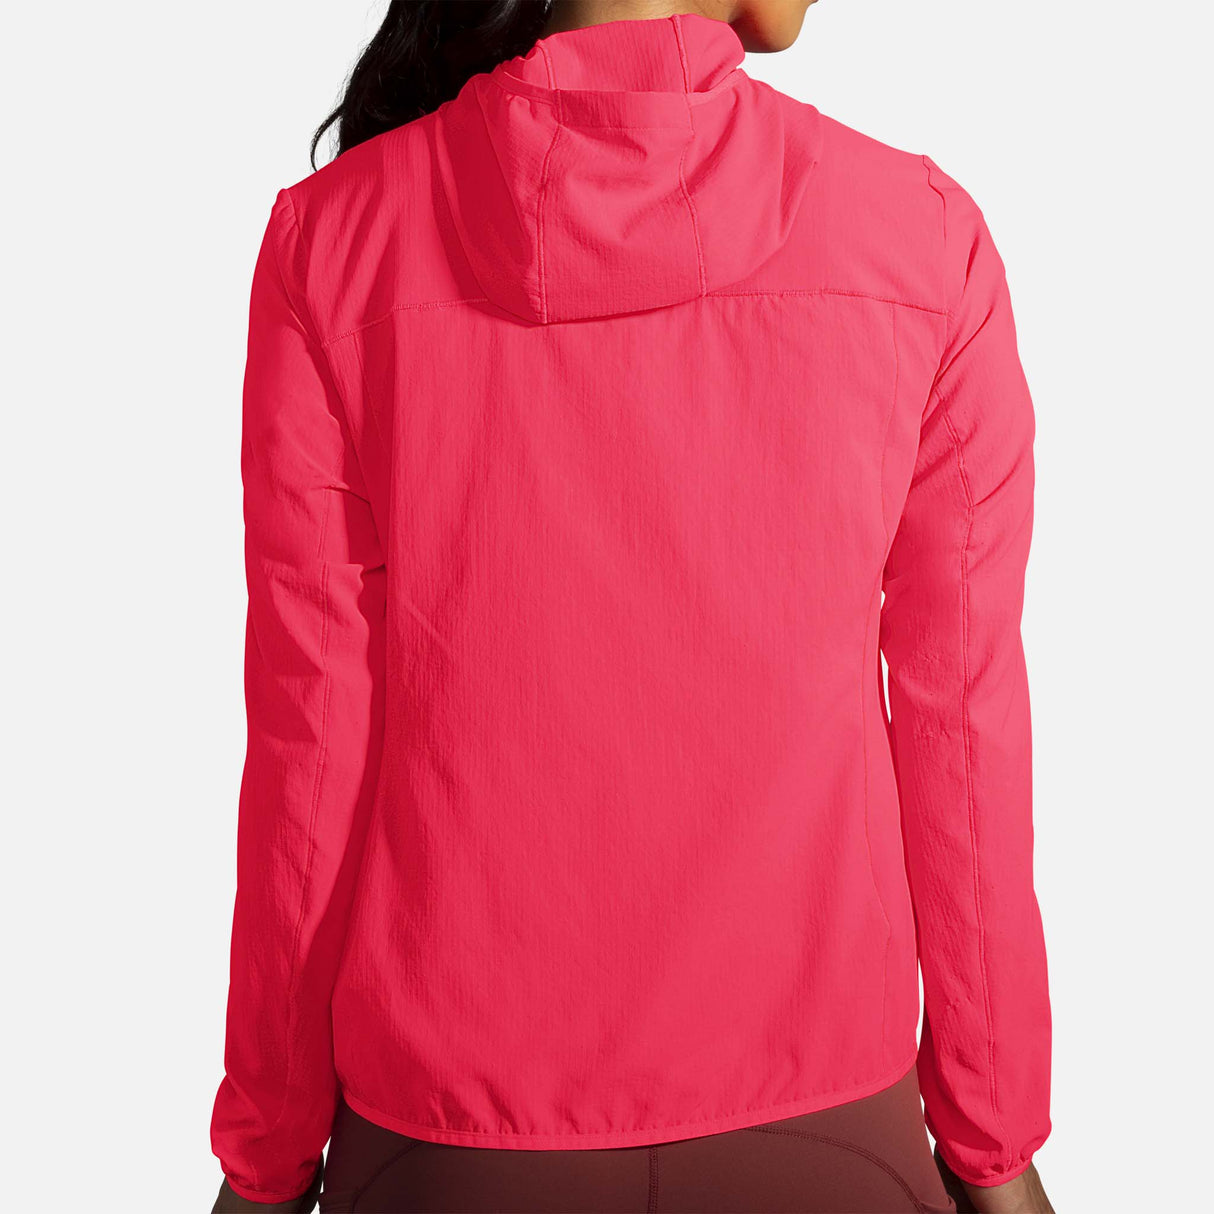 Brooks Canopy jacket de course rose femme dos